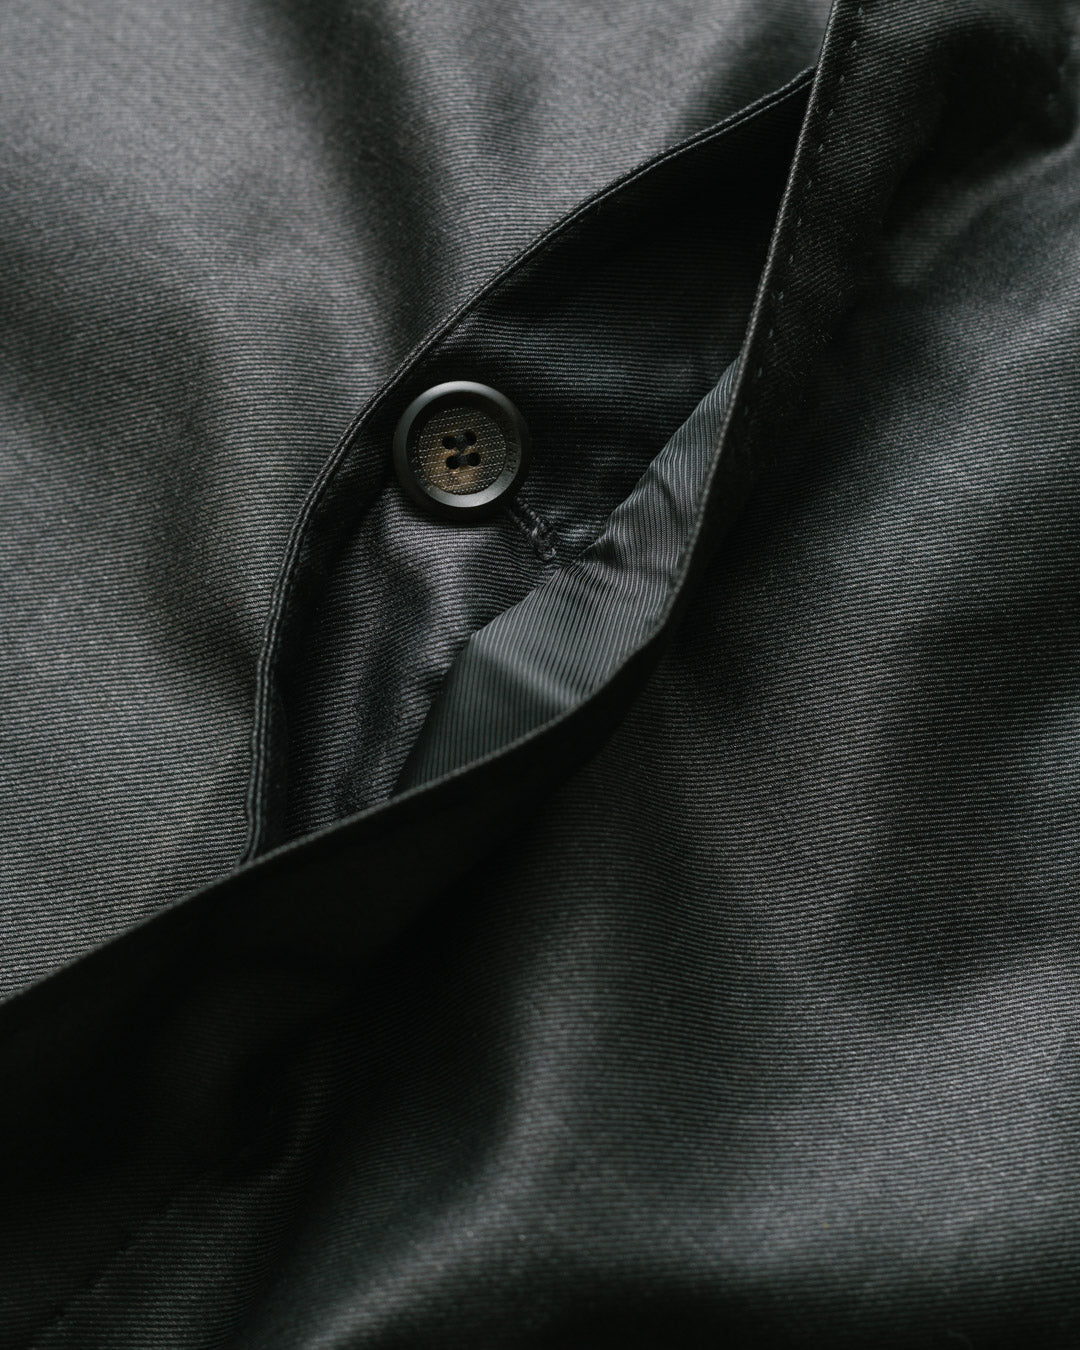 Dark charcoal dress coat